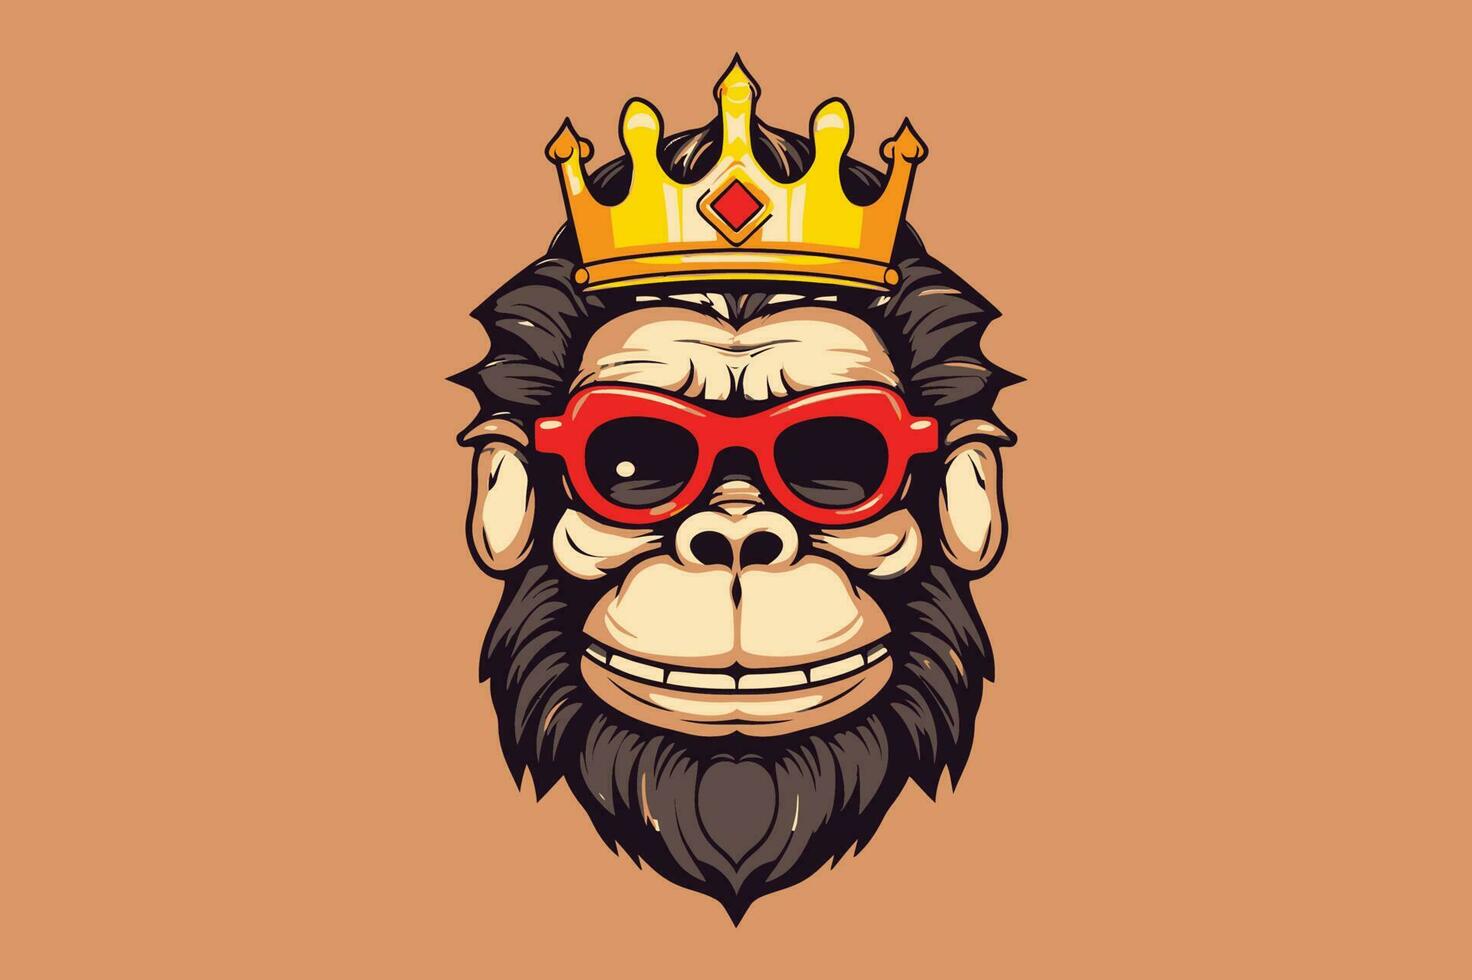 Rey kong mono con sonrisa vistiendo lentes o googles y un corona mascota logo vector sublimación diseño